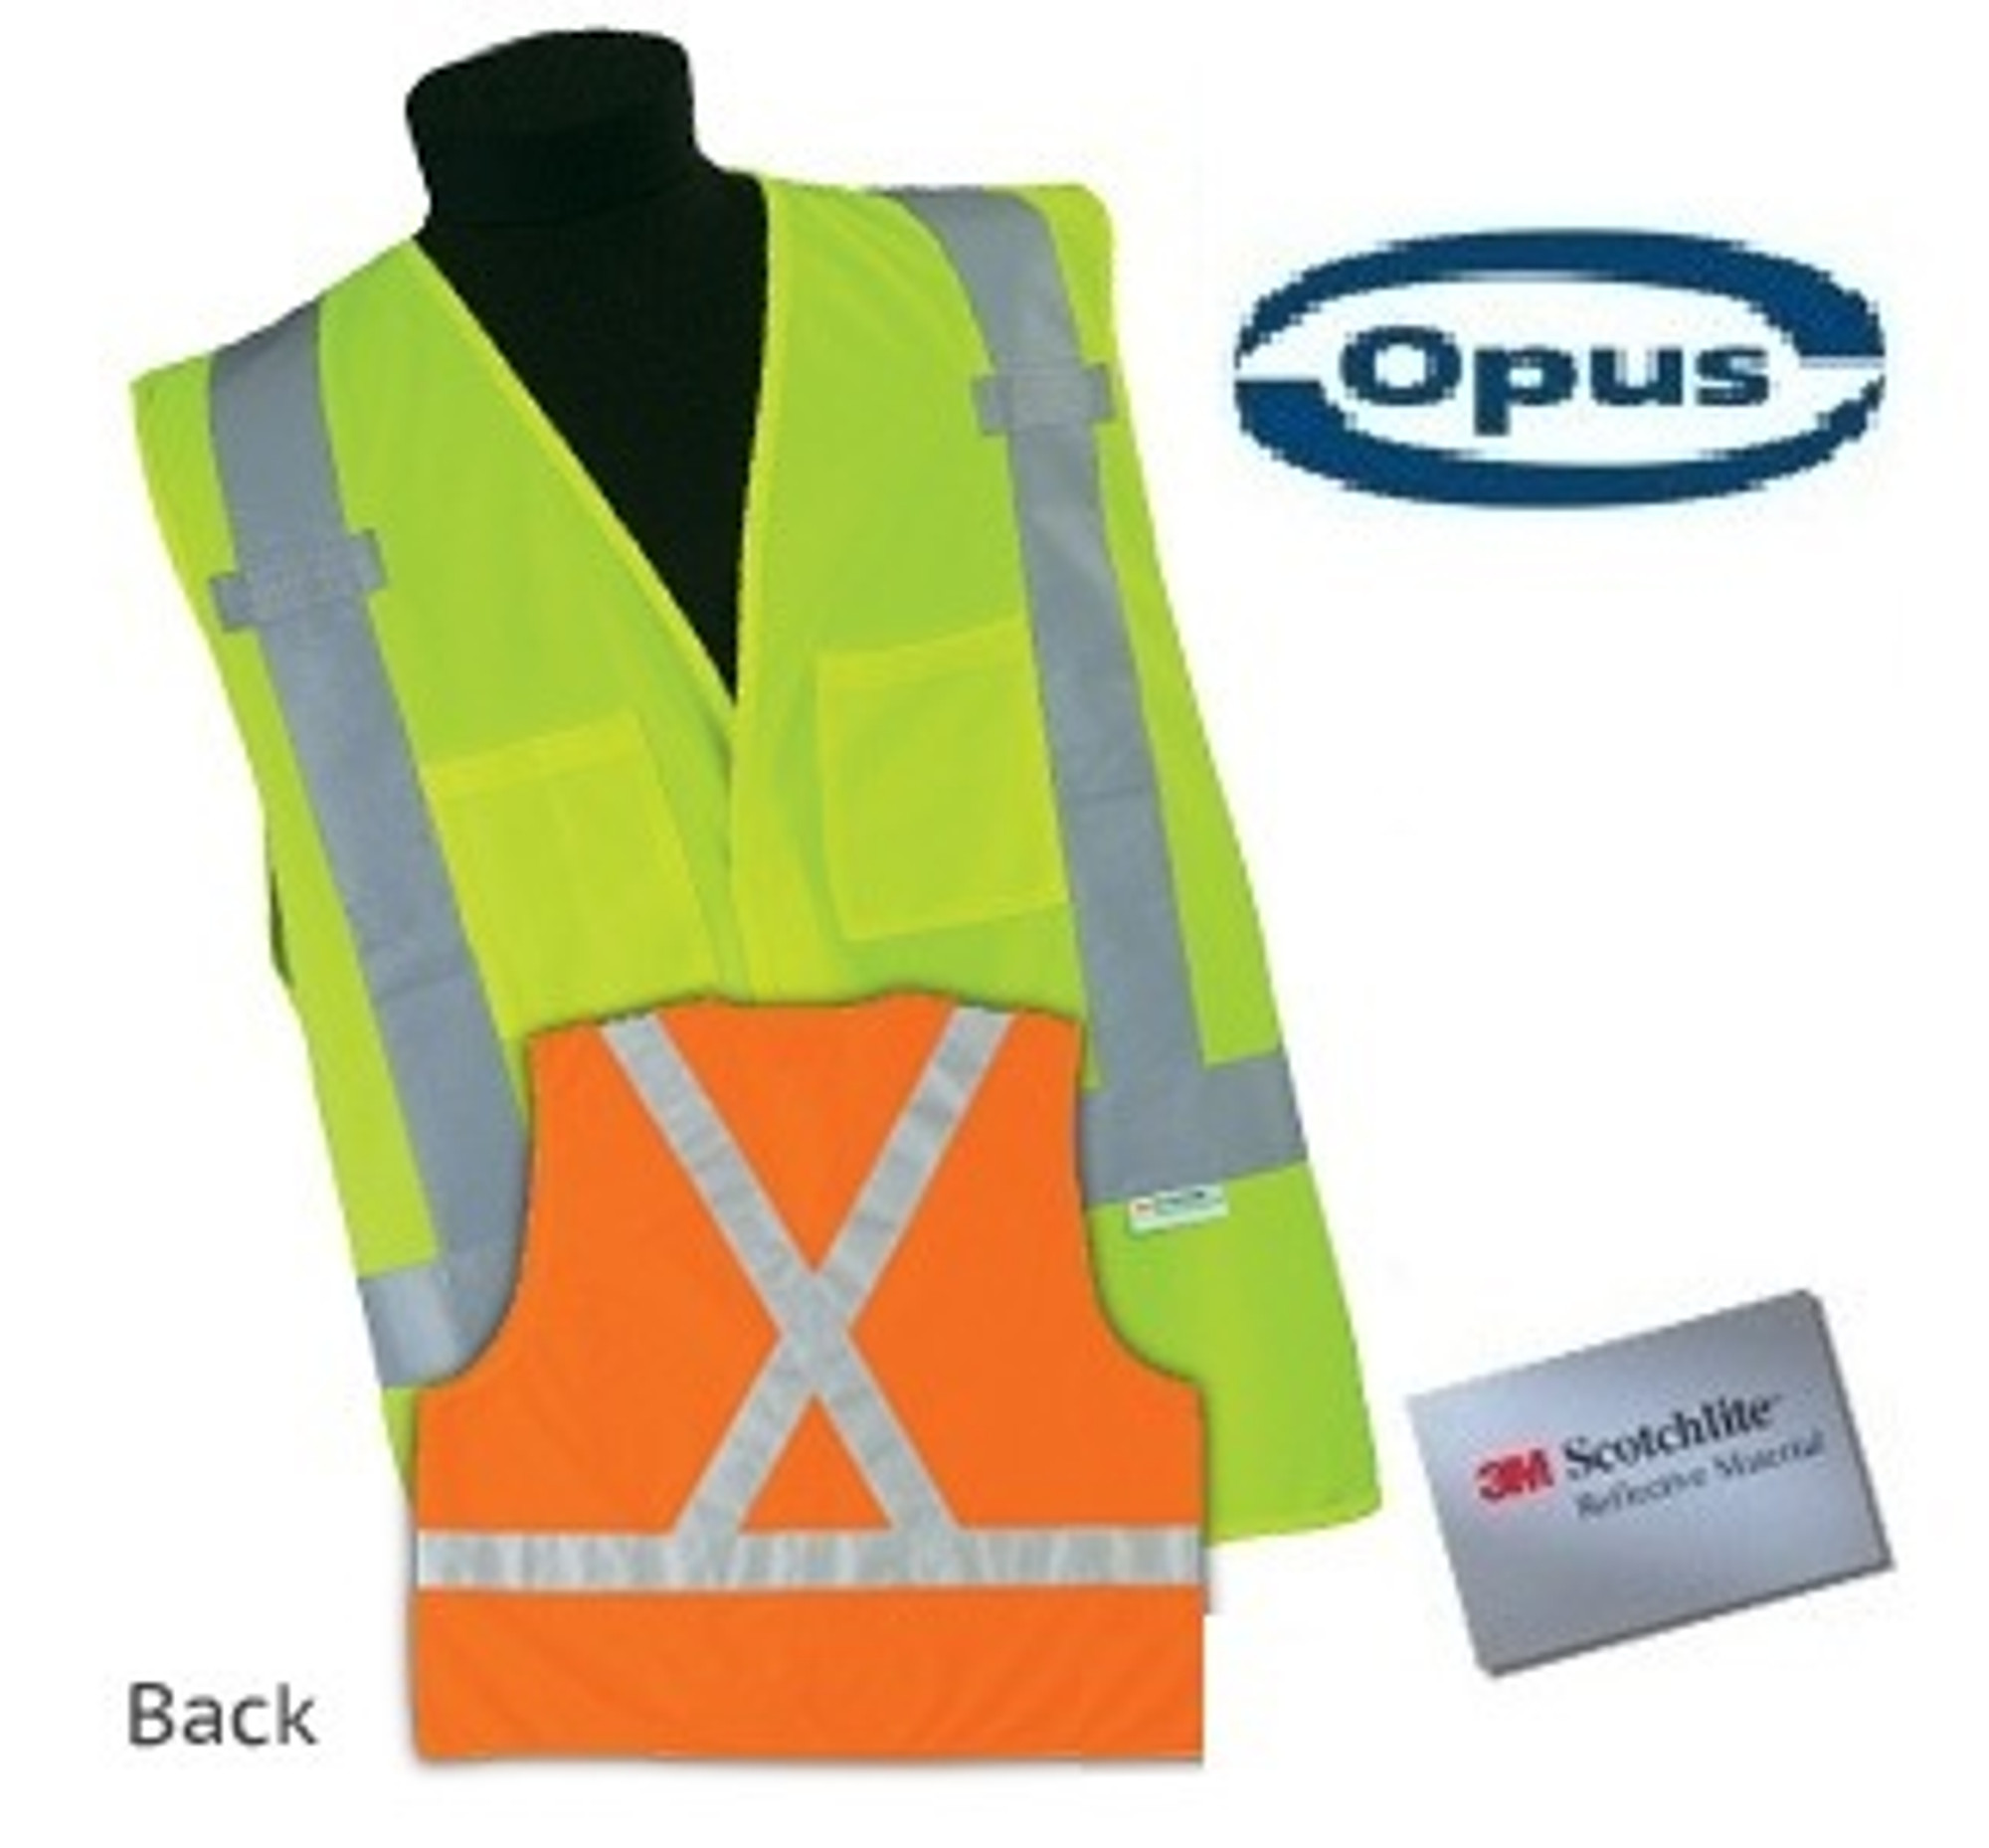 Opus Class 2 Safety Vest